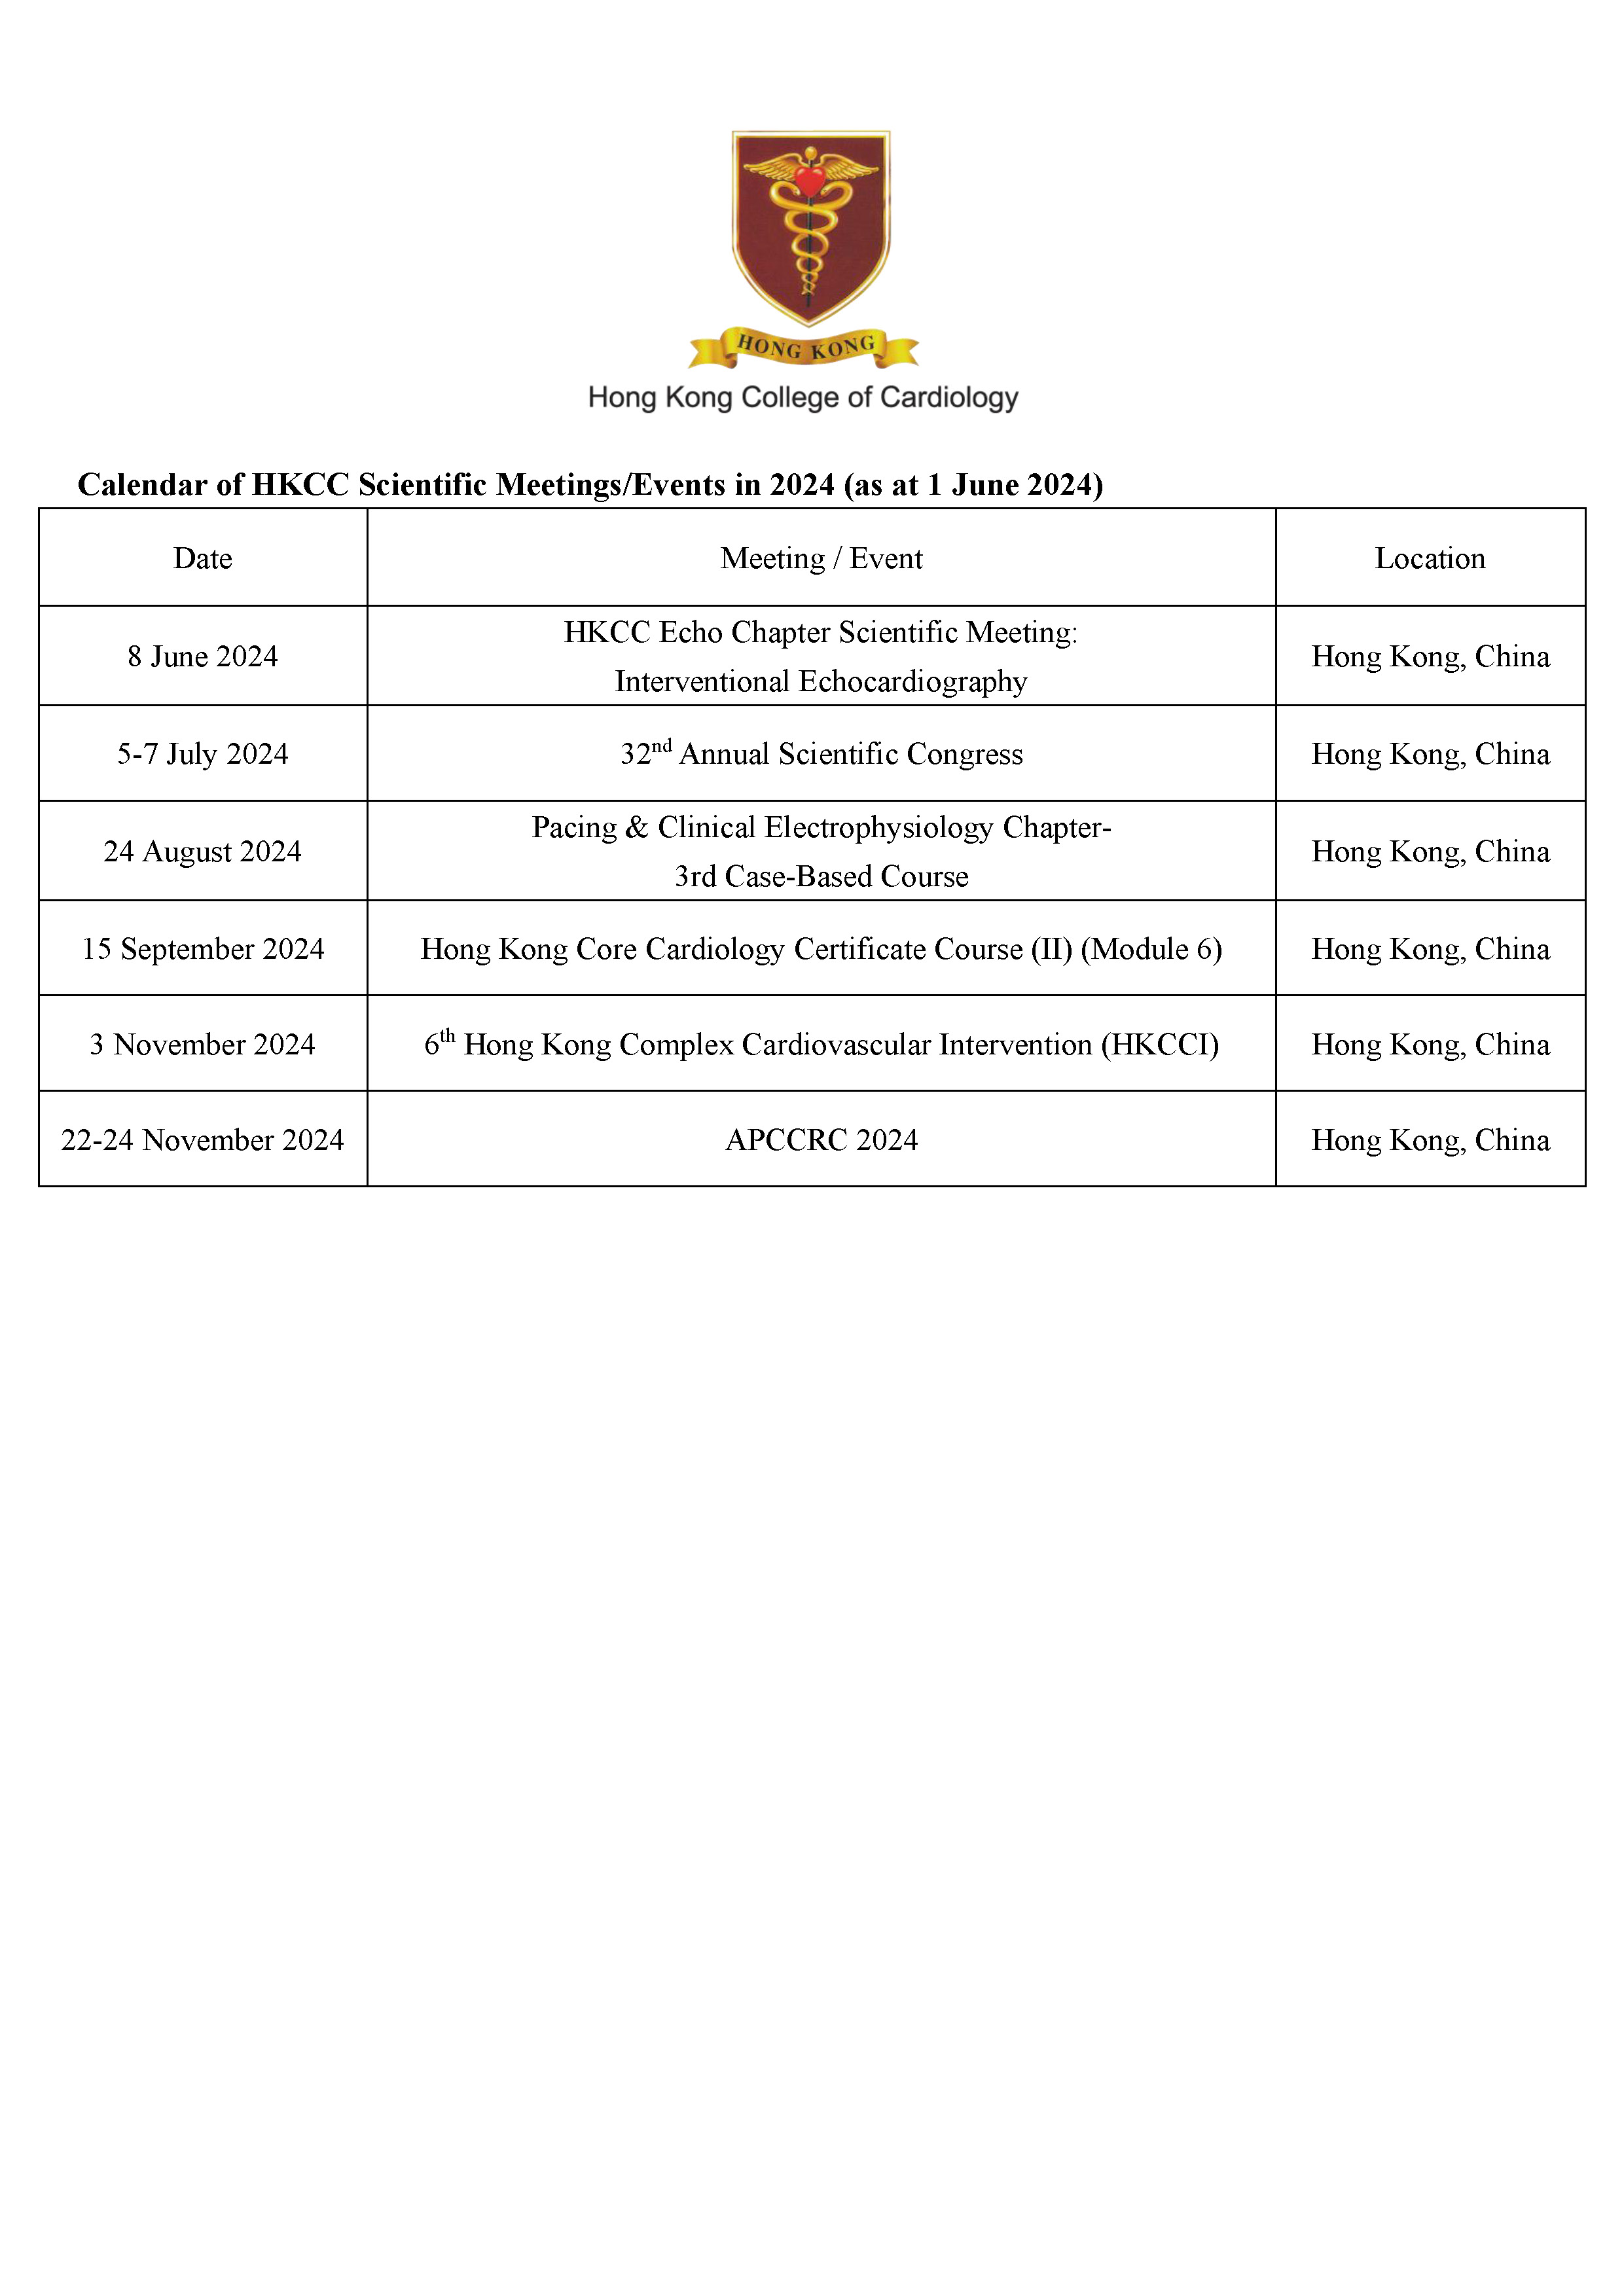 Calendar of HKCC Scientific Meetings / Events in 2024 (as at 1 May 2024)